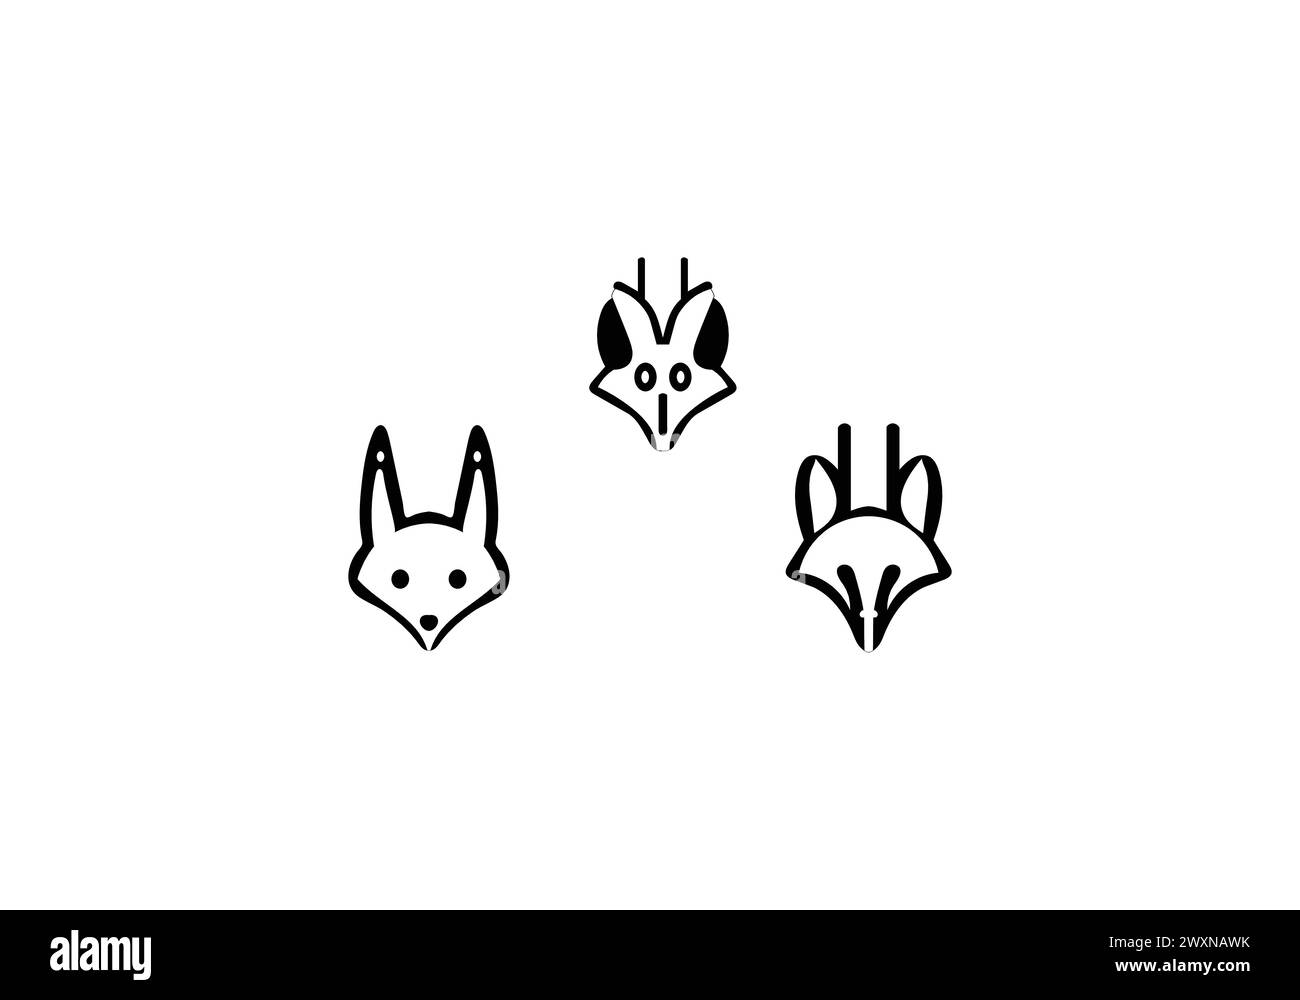 Amazing Cross Fox minimal icon illustration design Stock Vector